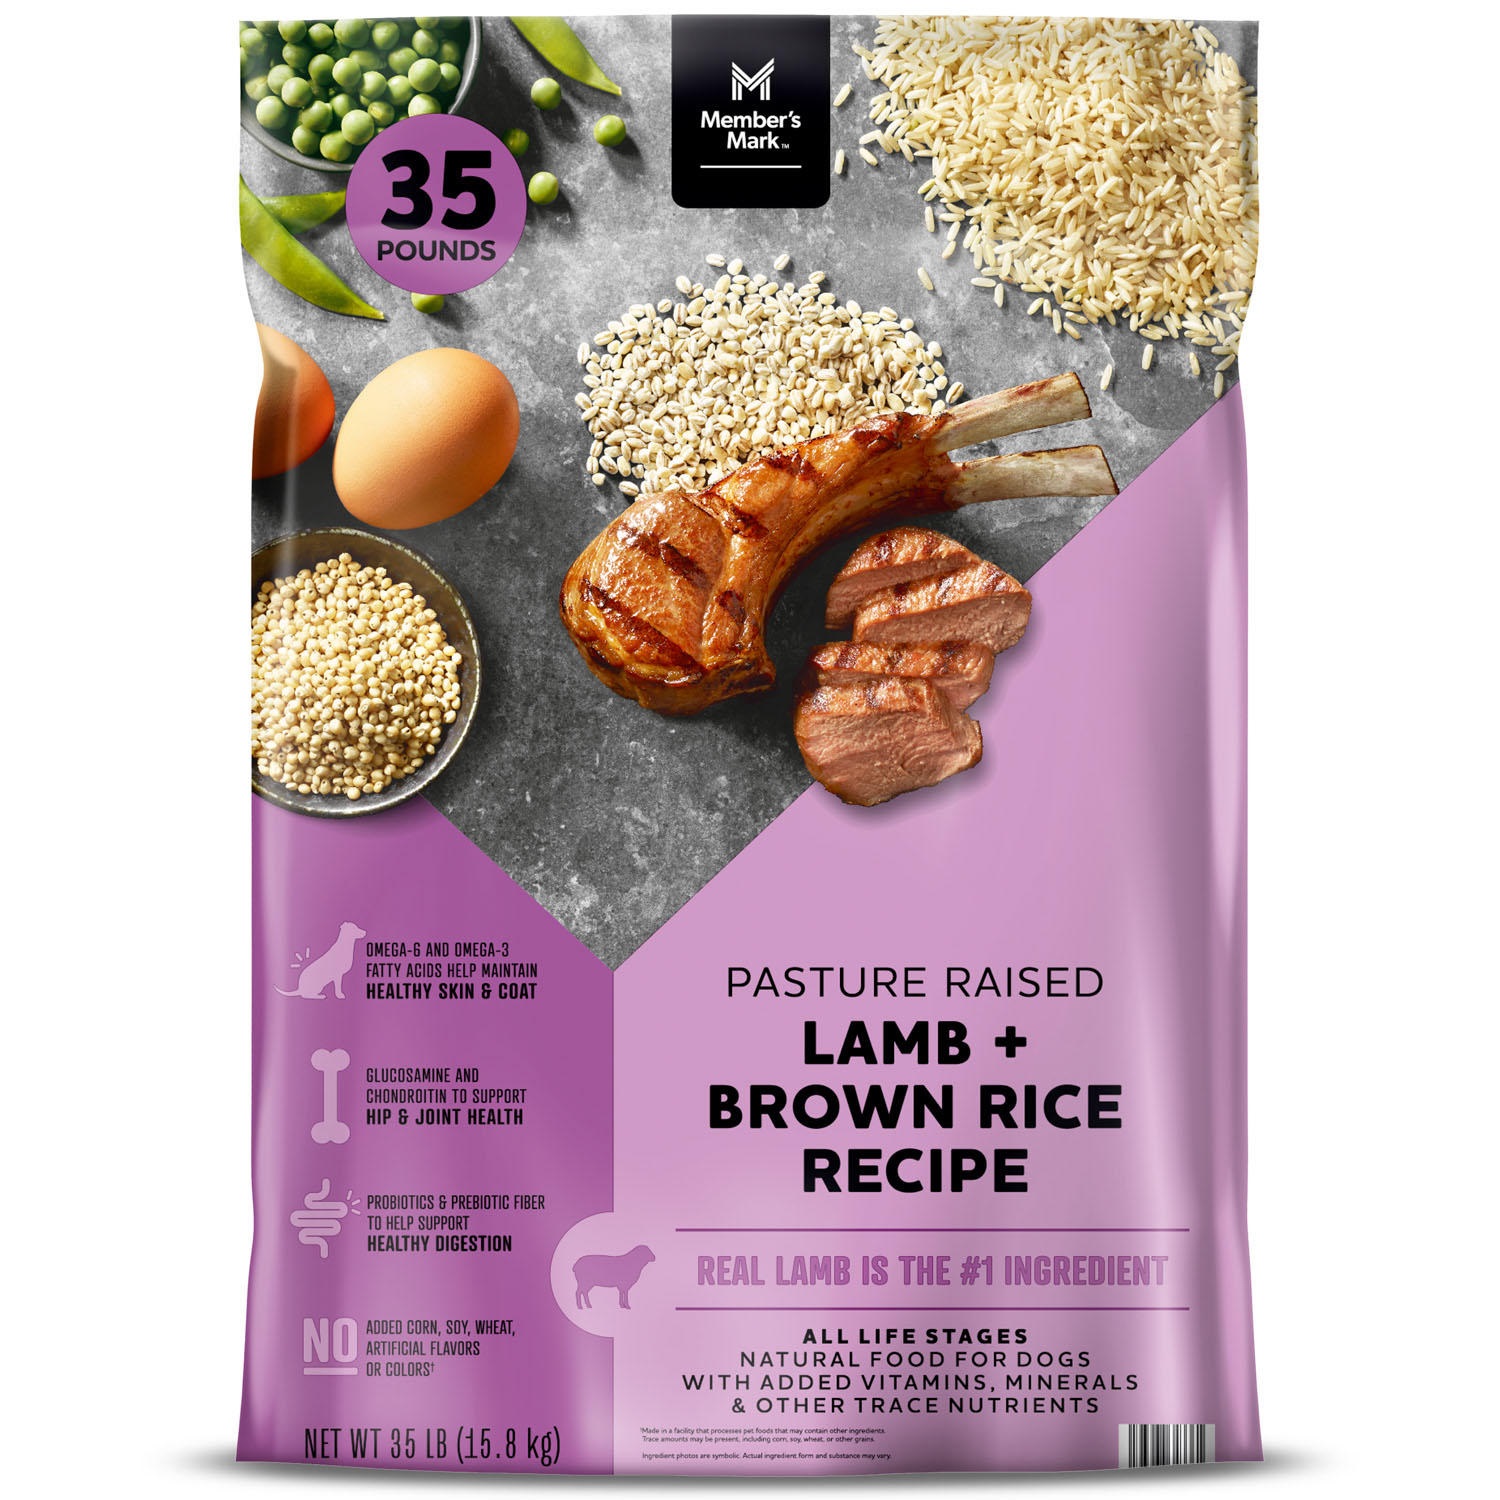 Member's Mark Pasture Raised Lamb + Brown Rice Recipe Dry Dog Food (35 Pounds)